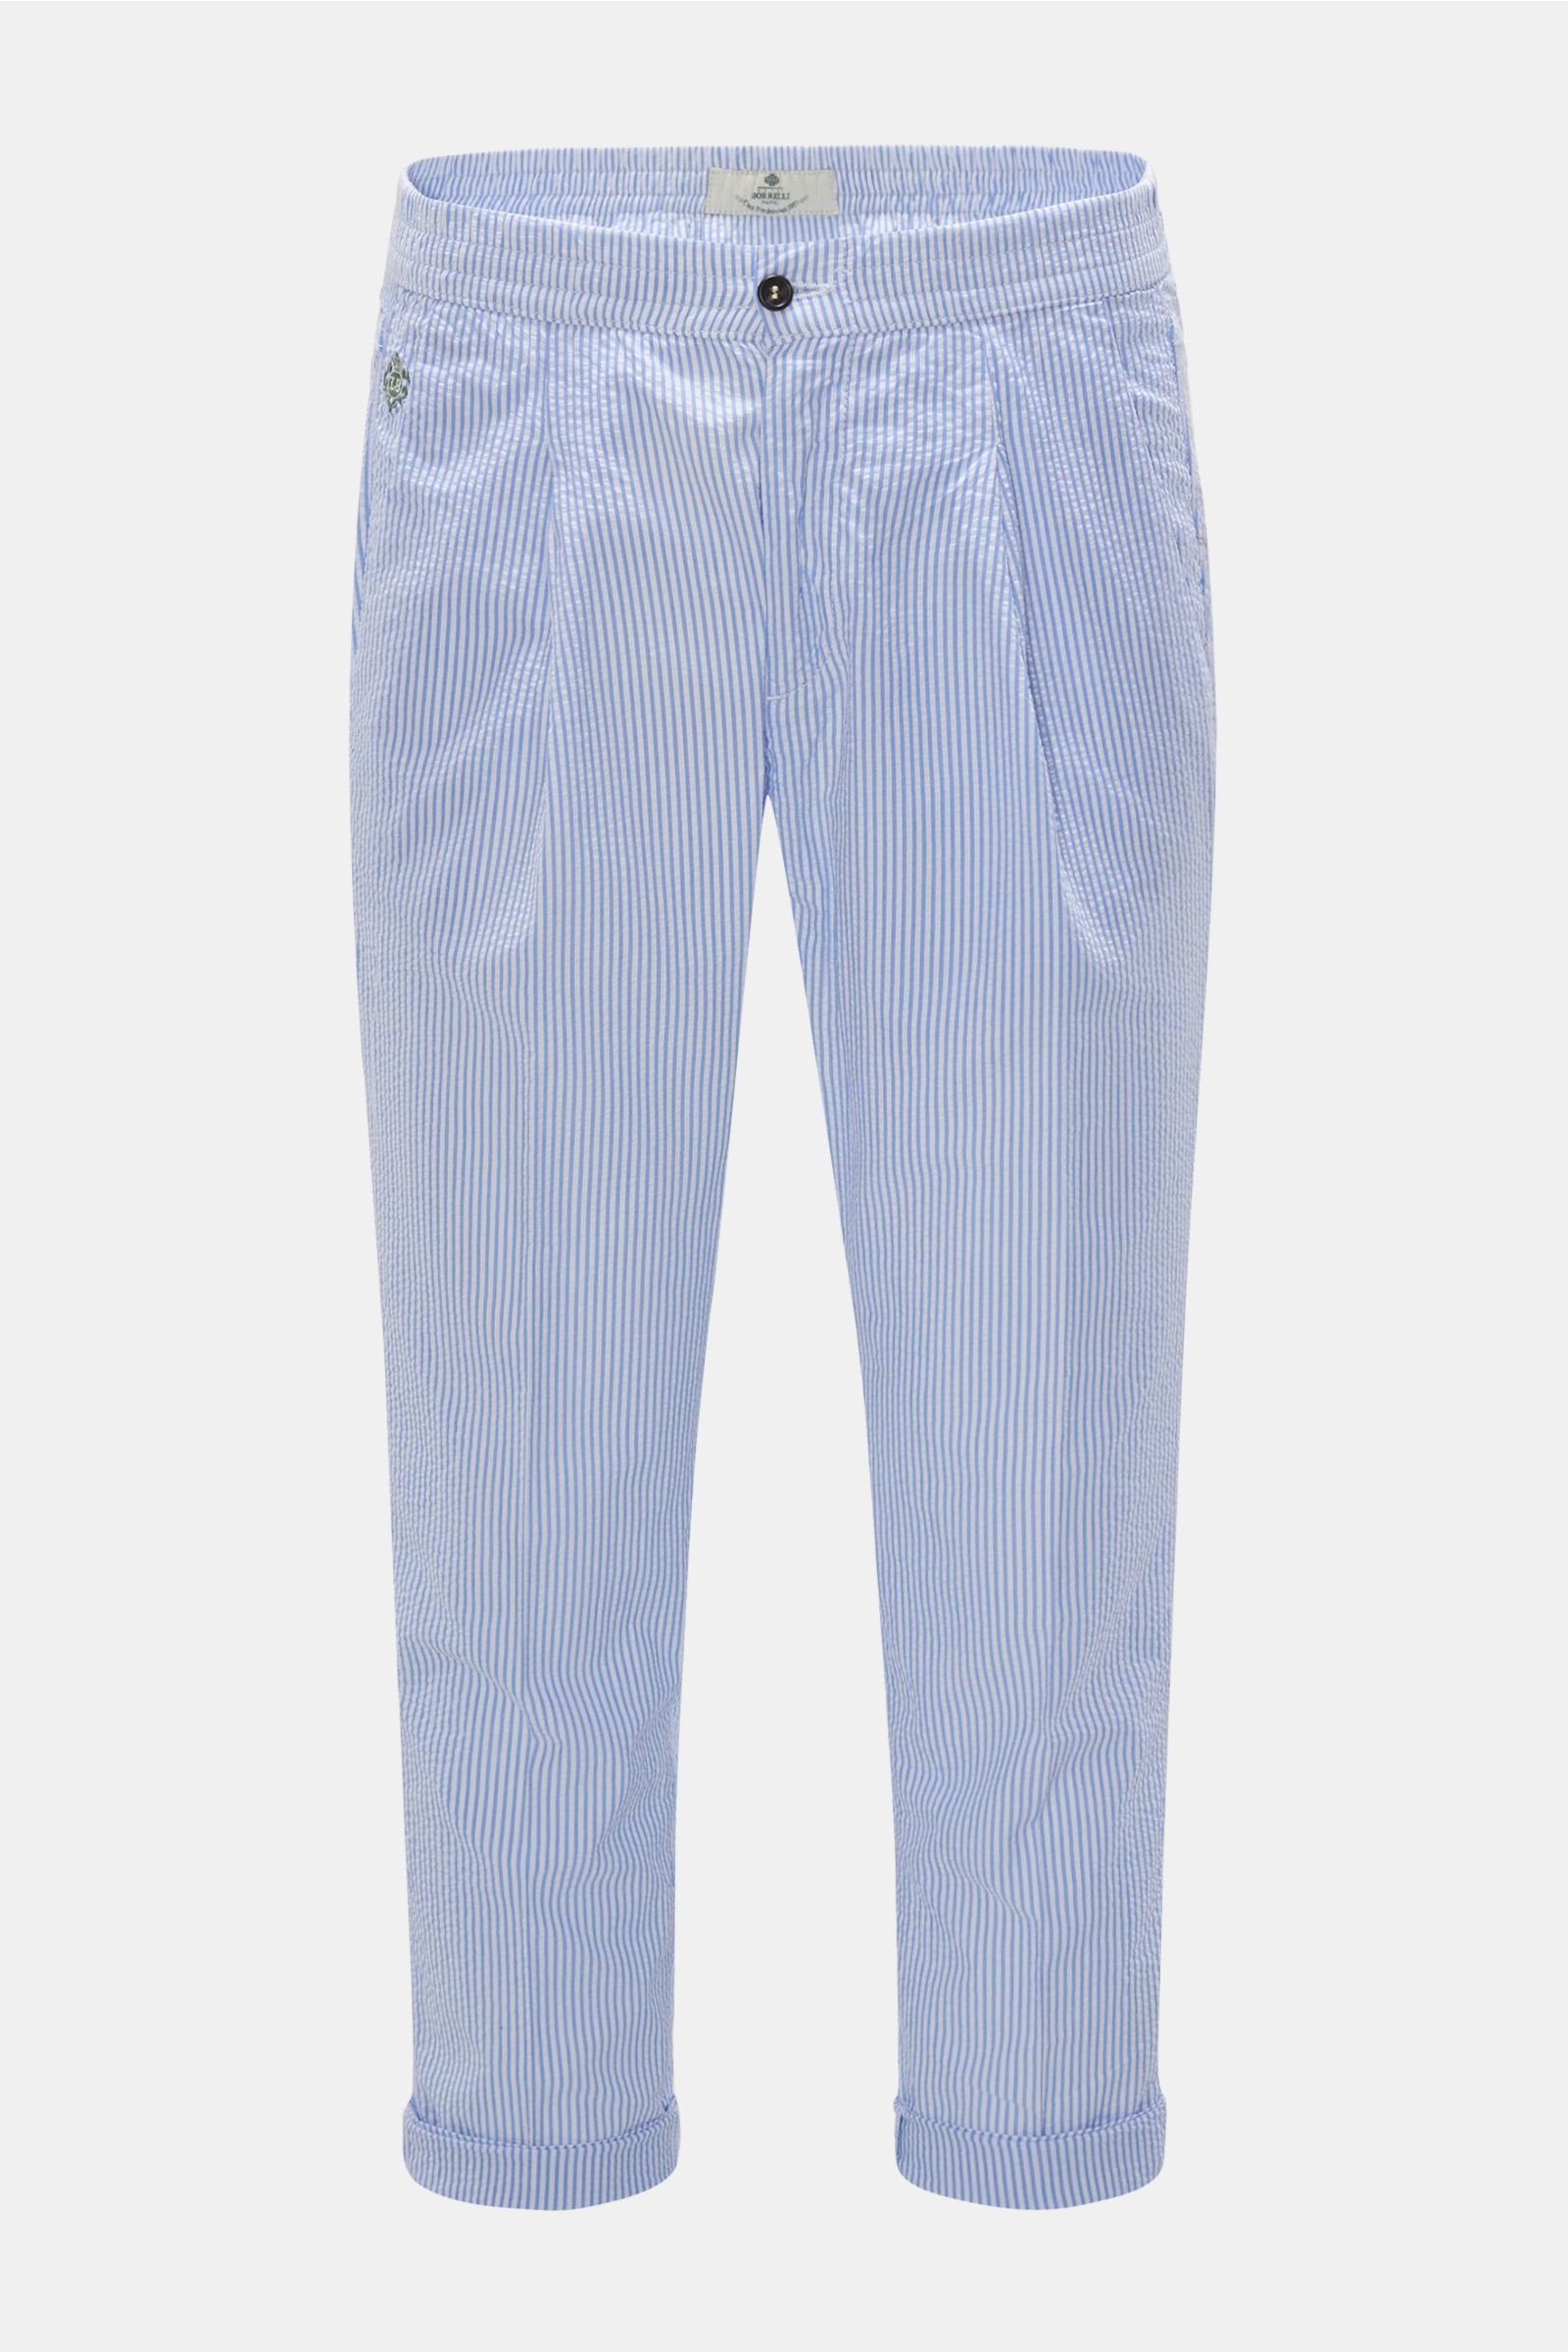 Seersucker jogger pants 'Filangieri' light blue/white striped